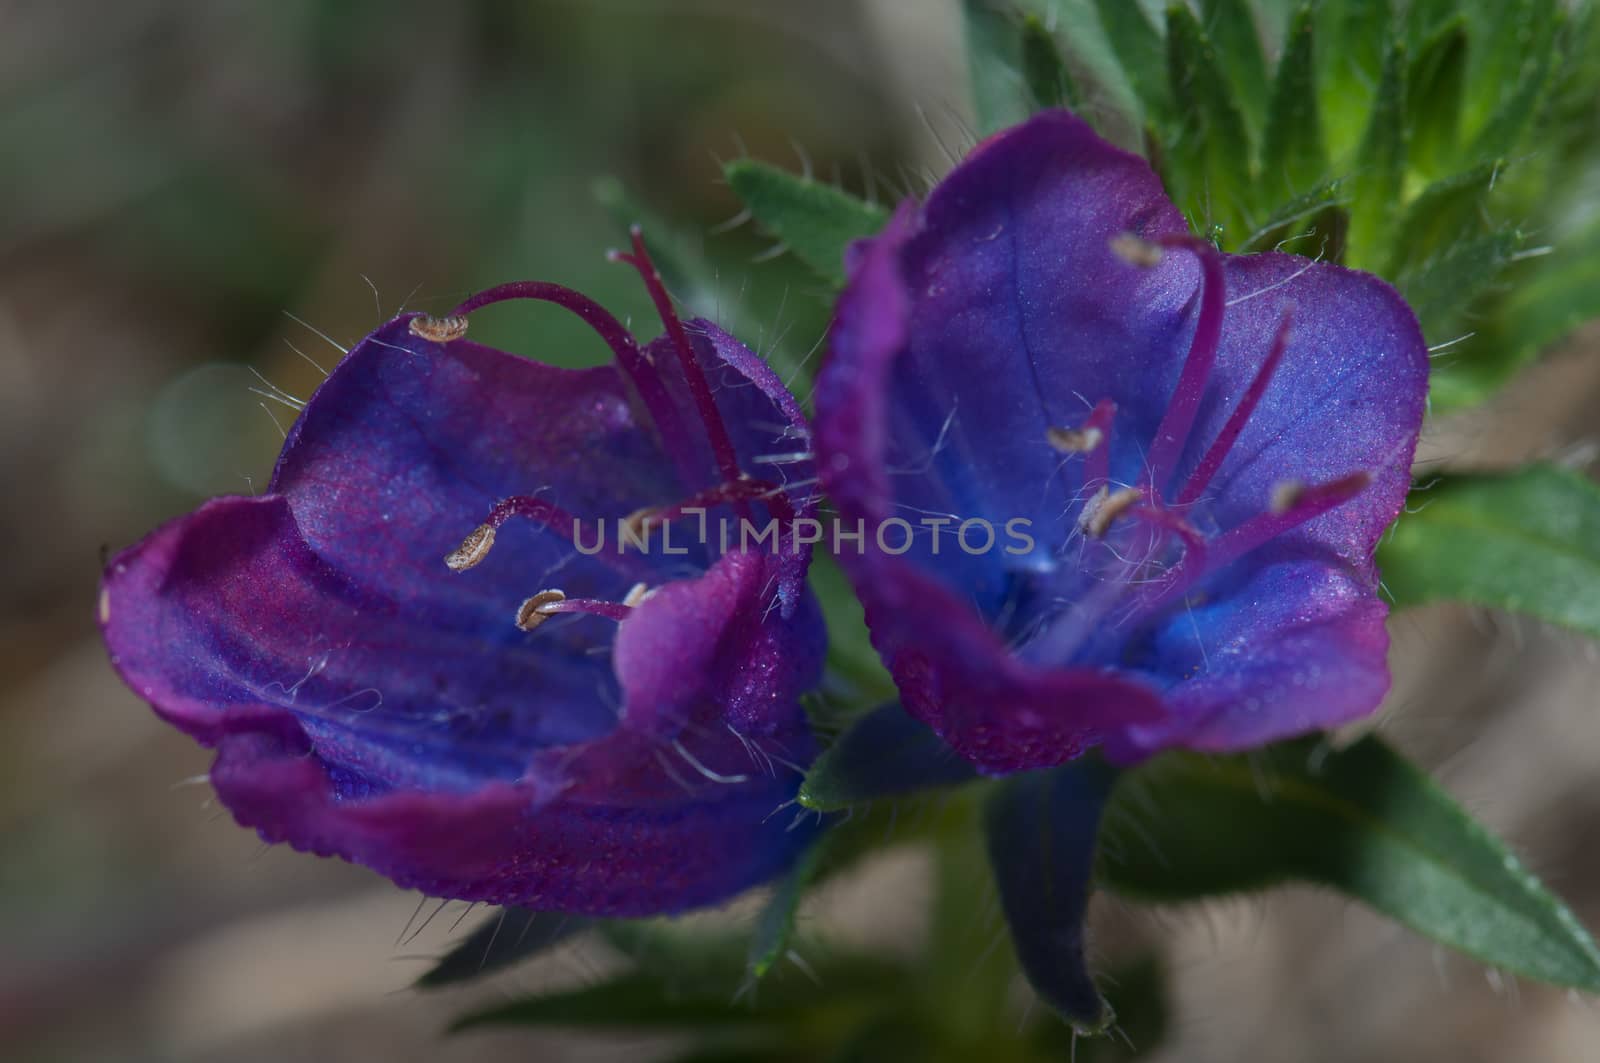 Flowers of purple viper's bugloss by VictorSuarez